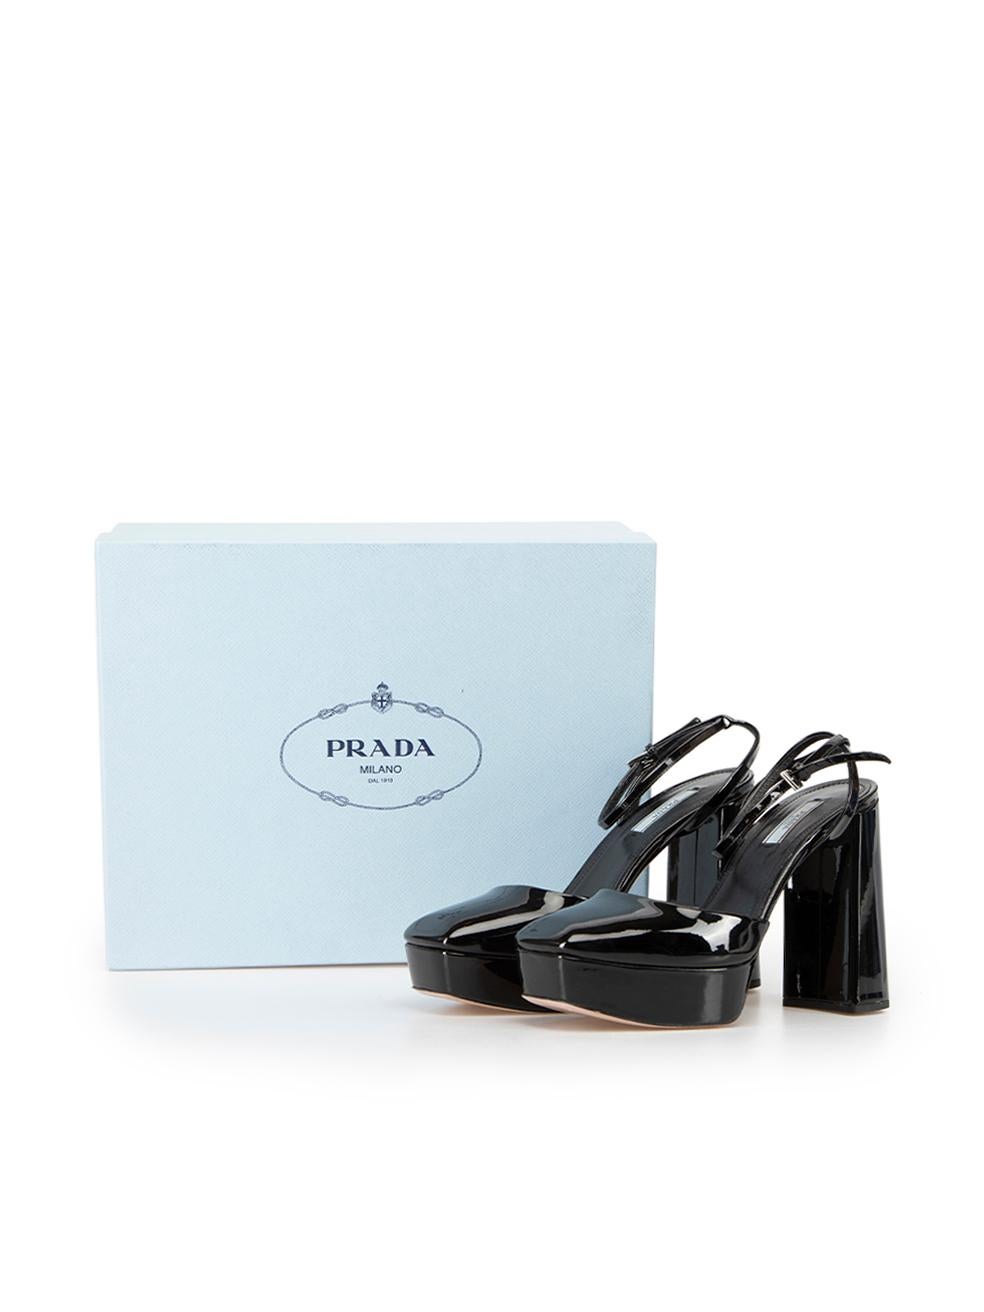 Prada Women's Black Patent Leather Square Toe Platform Heels 2